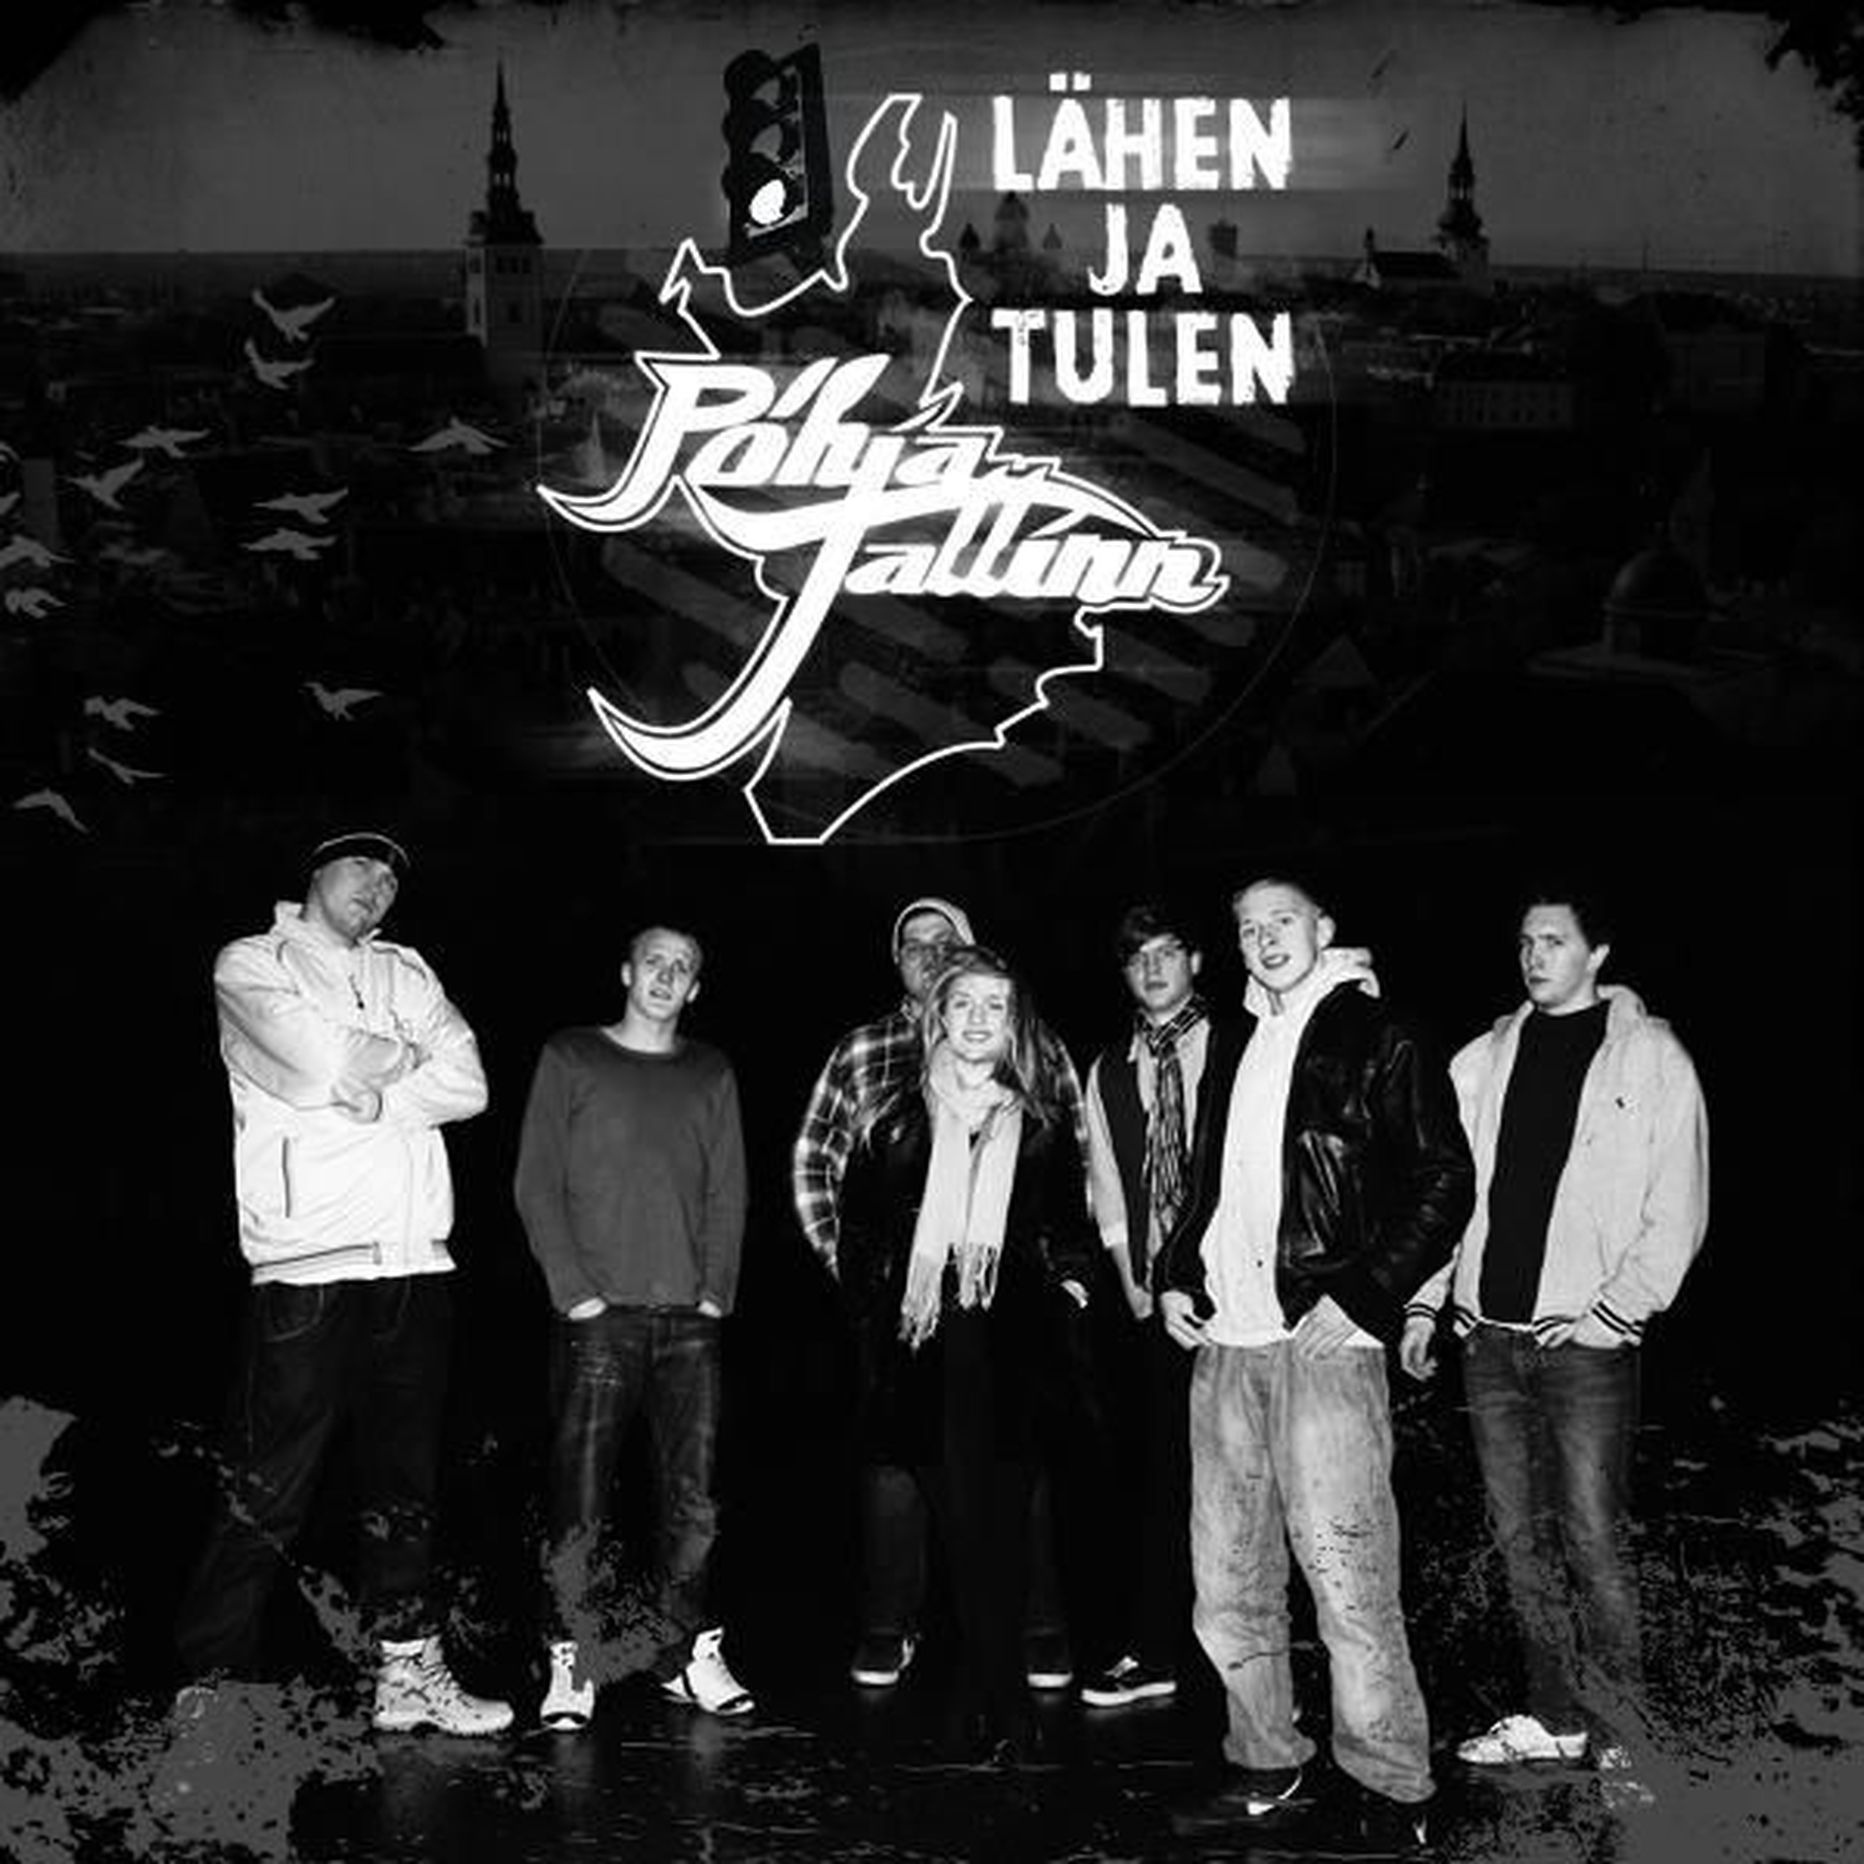 Eesti räpigrupp Põhja-Tallinn andis välja singli "Lähen ja tulen"